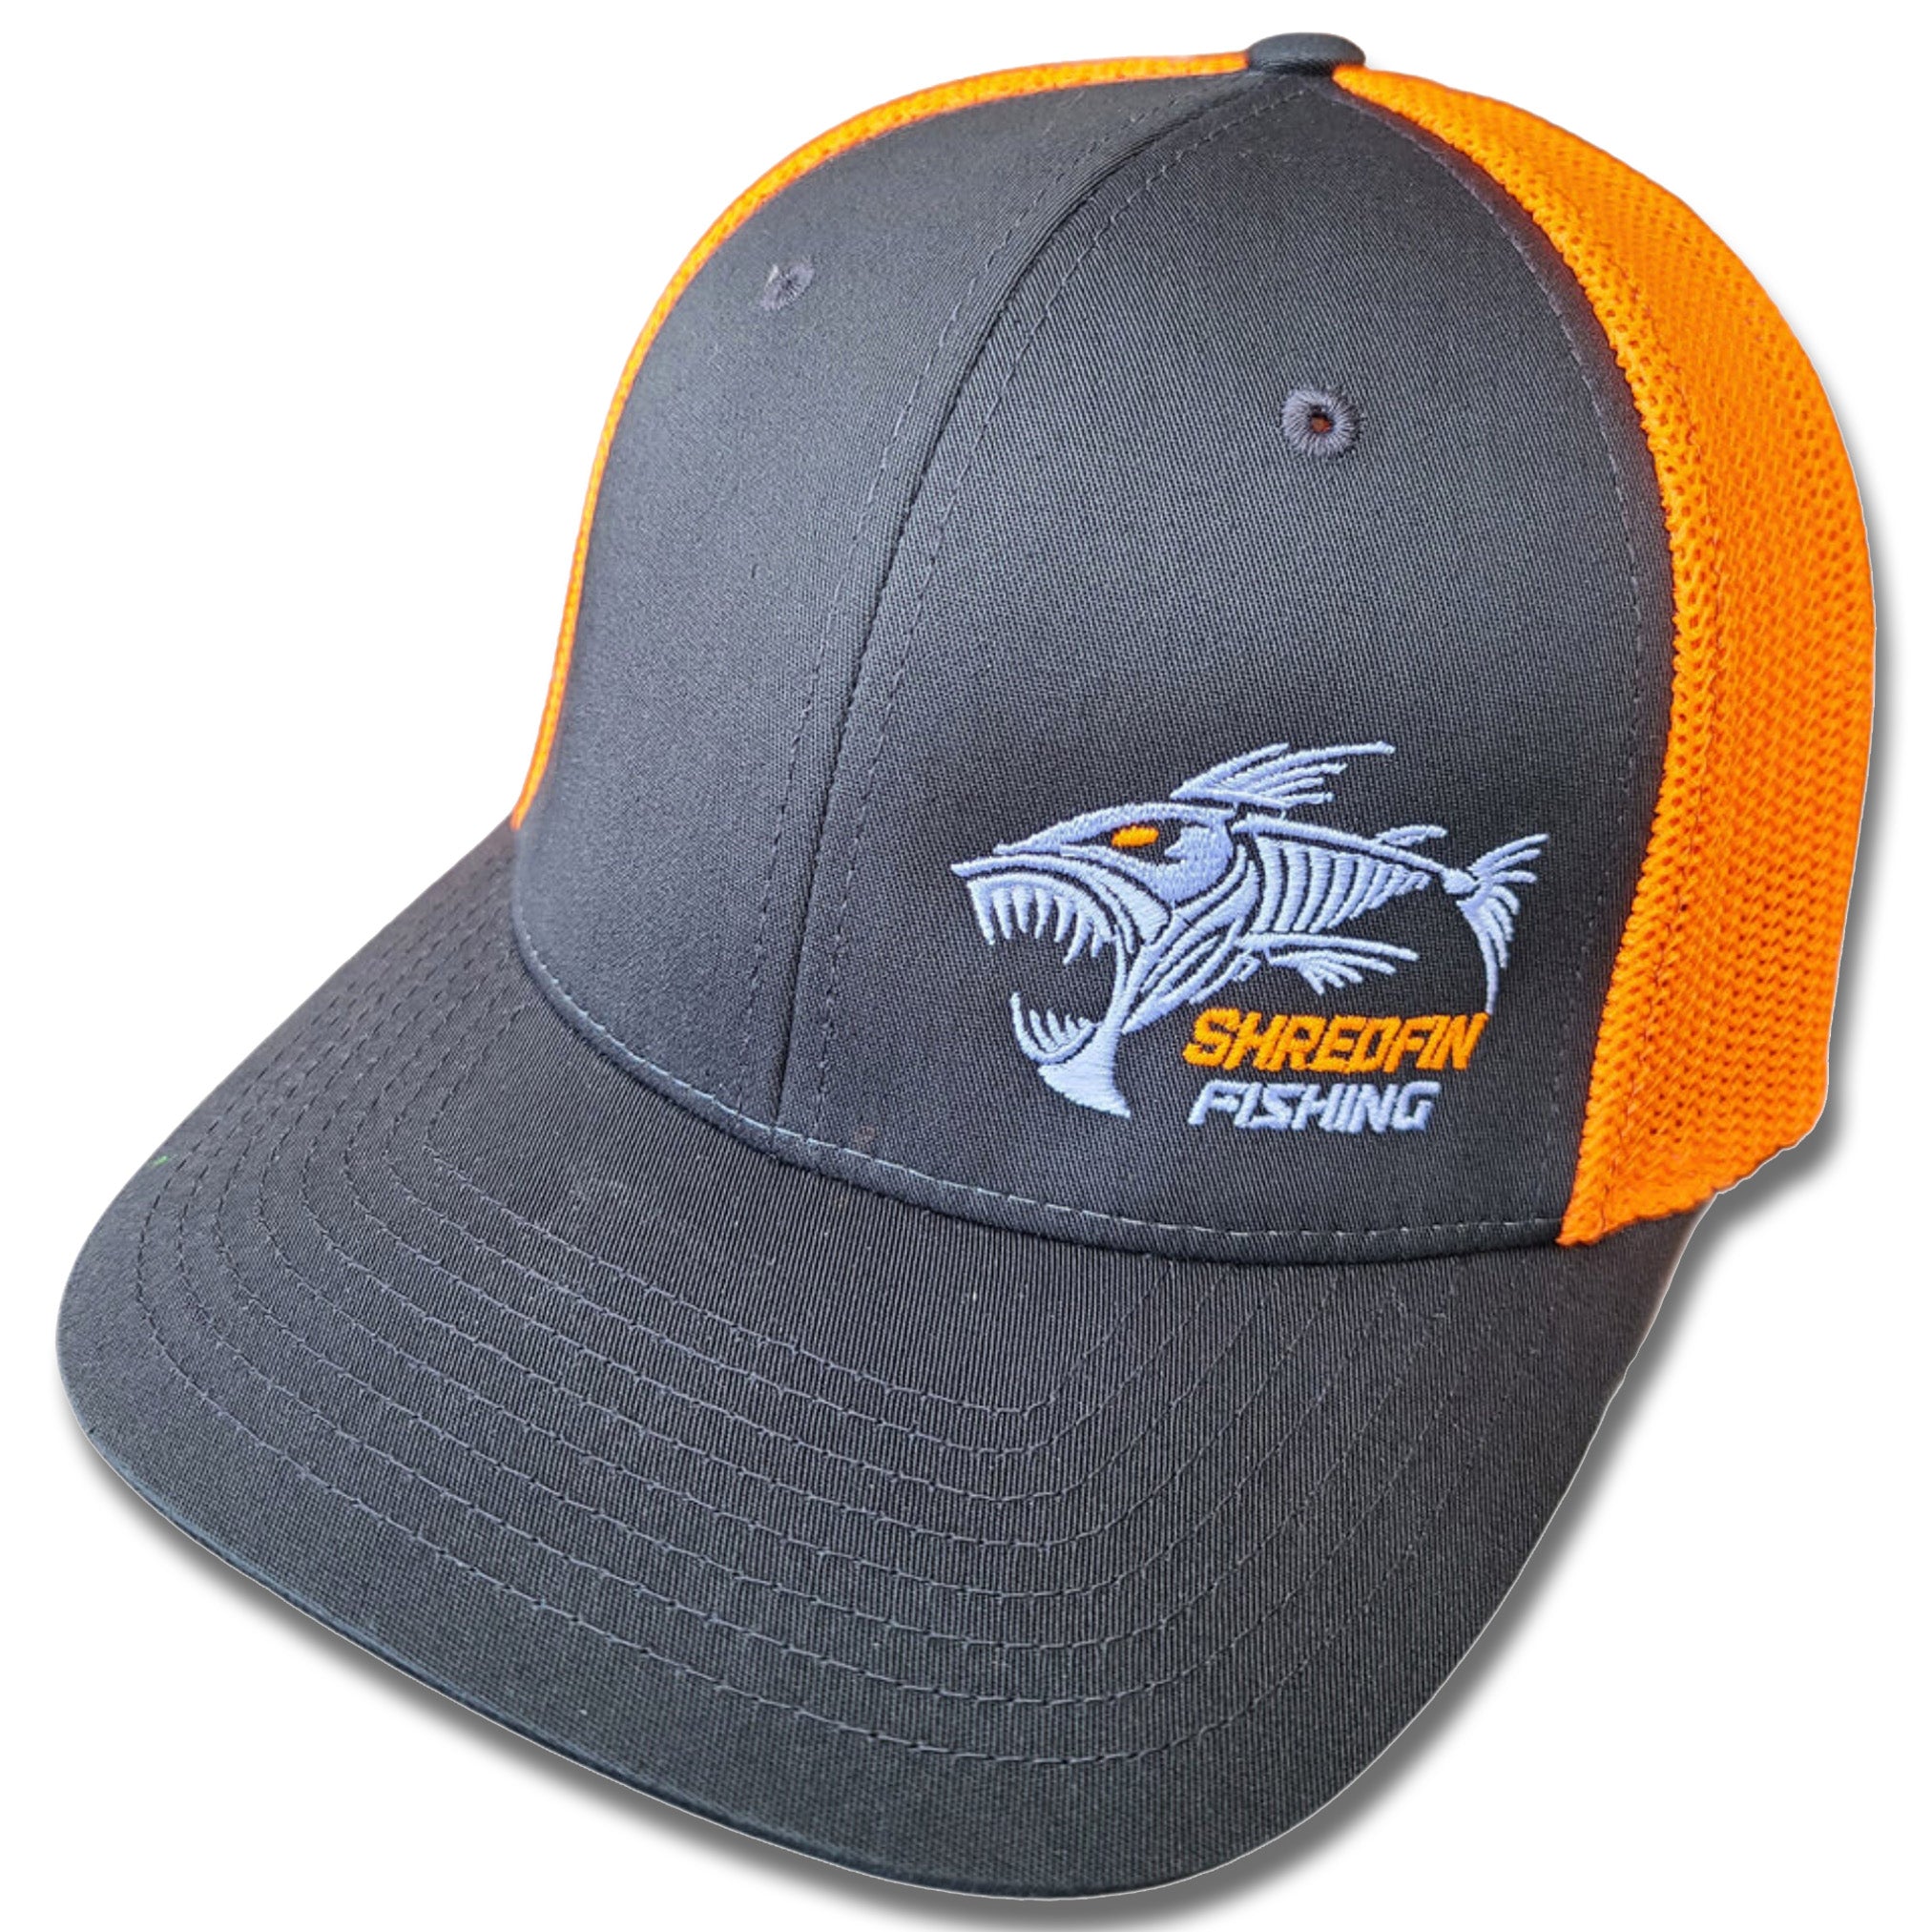 ShredFin Charcoal Gray & Neon Orange Flexfit Hat S-M